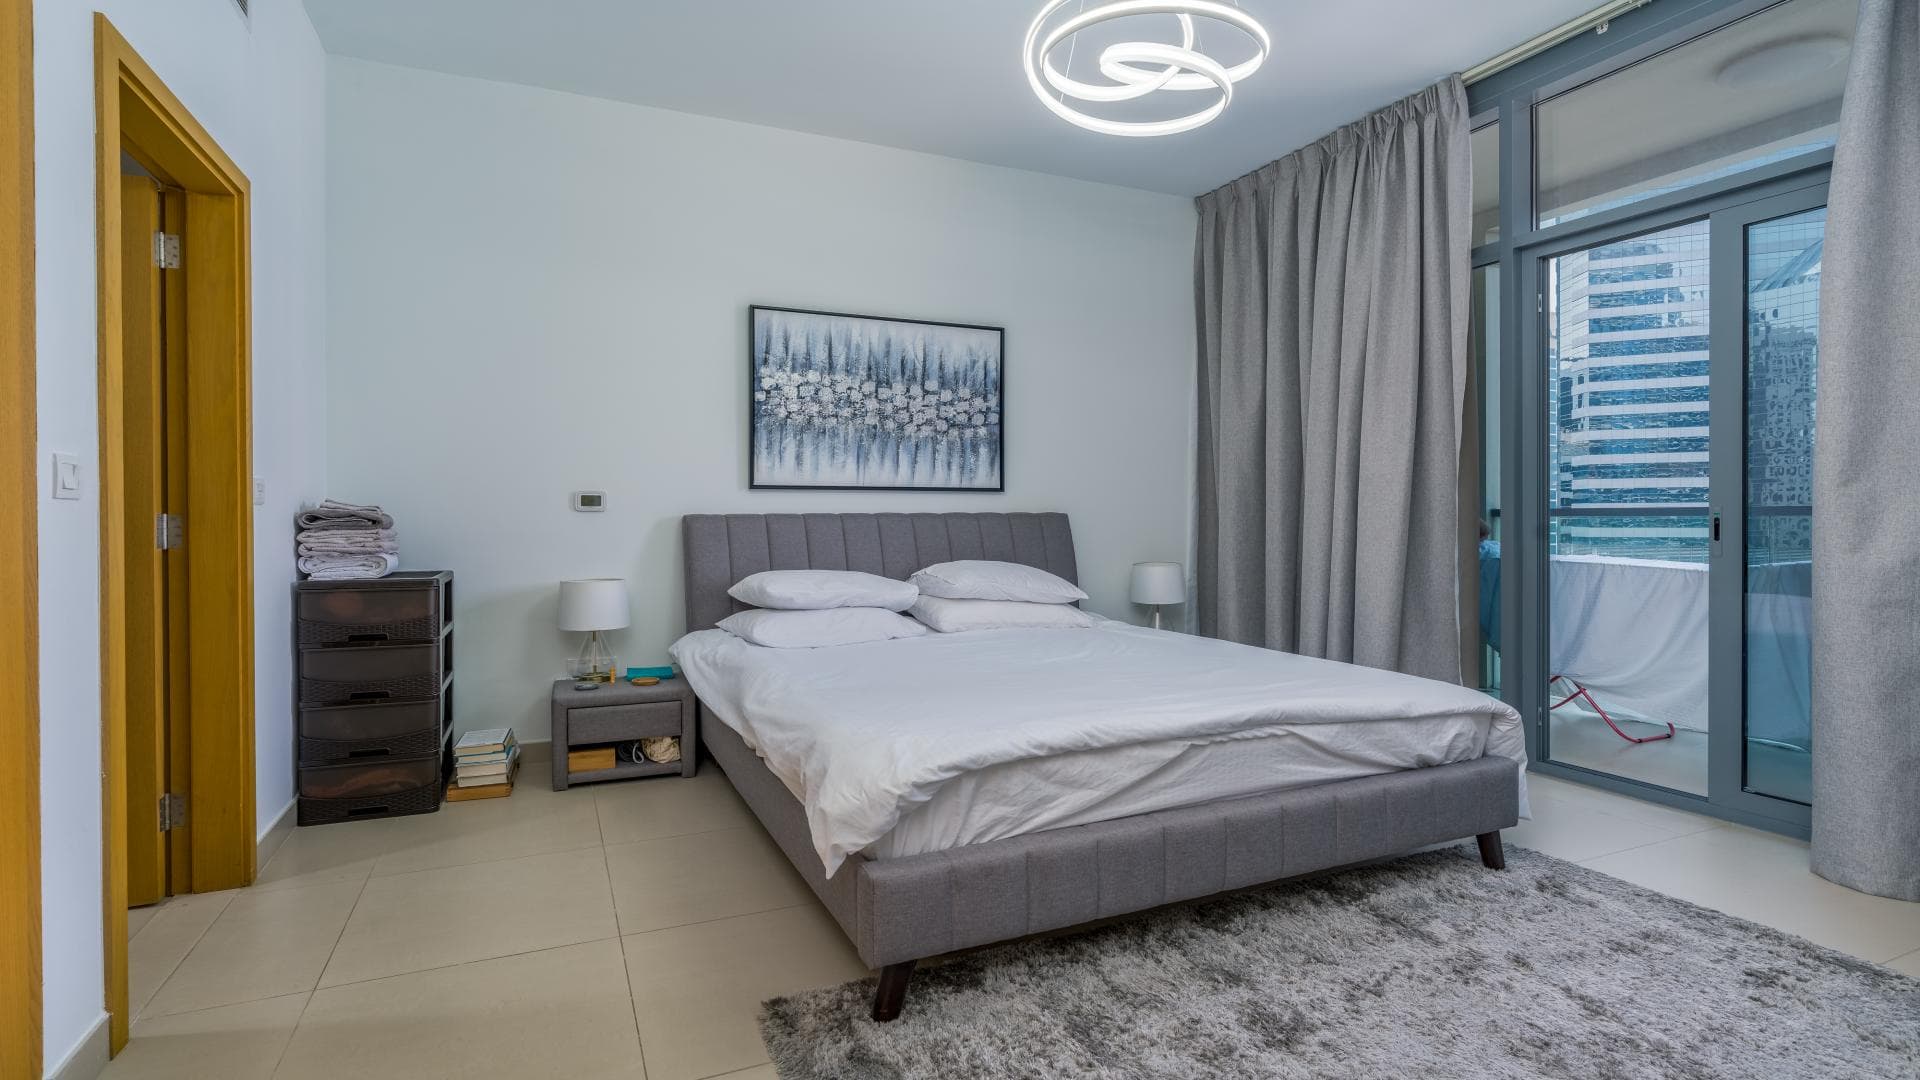 1 Bedroom Apartment For Rent Forte 1 Lp36260 217a9fe89fe82c00.jpg